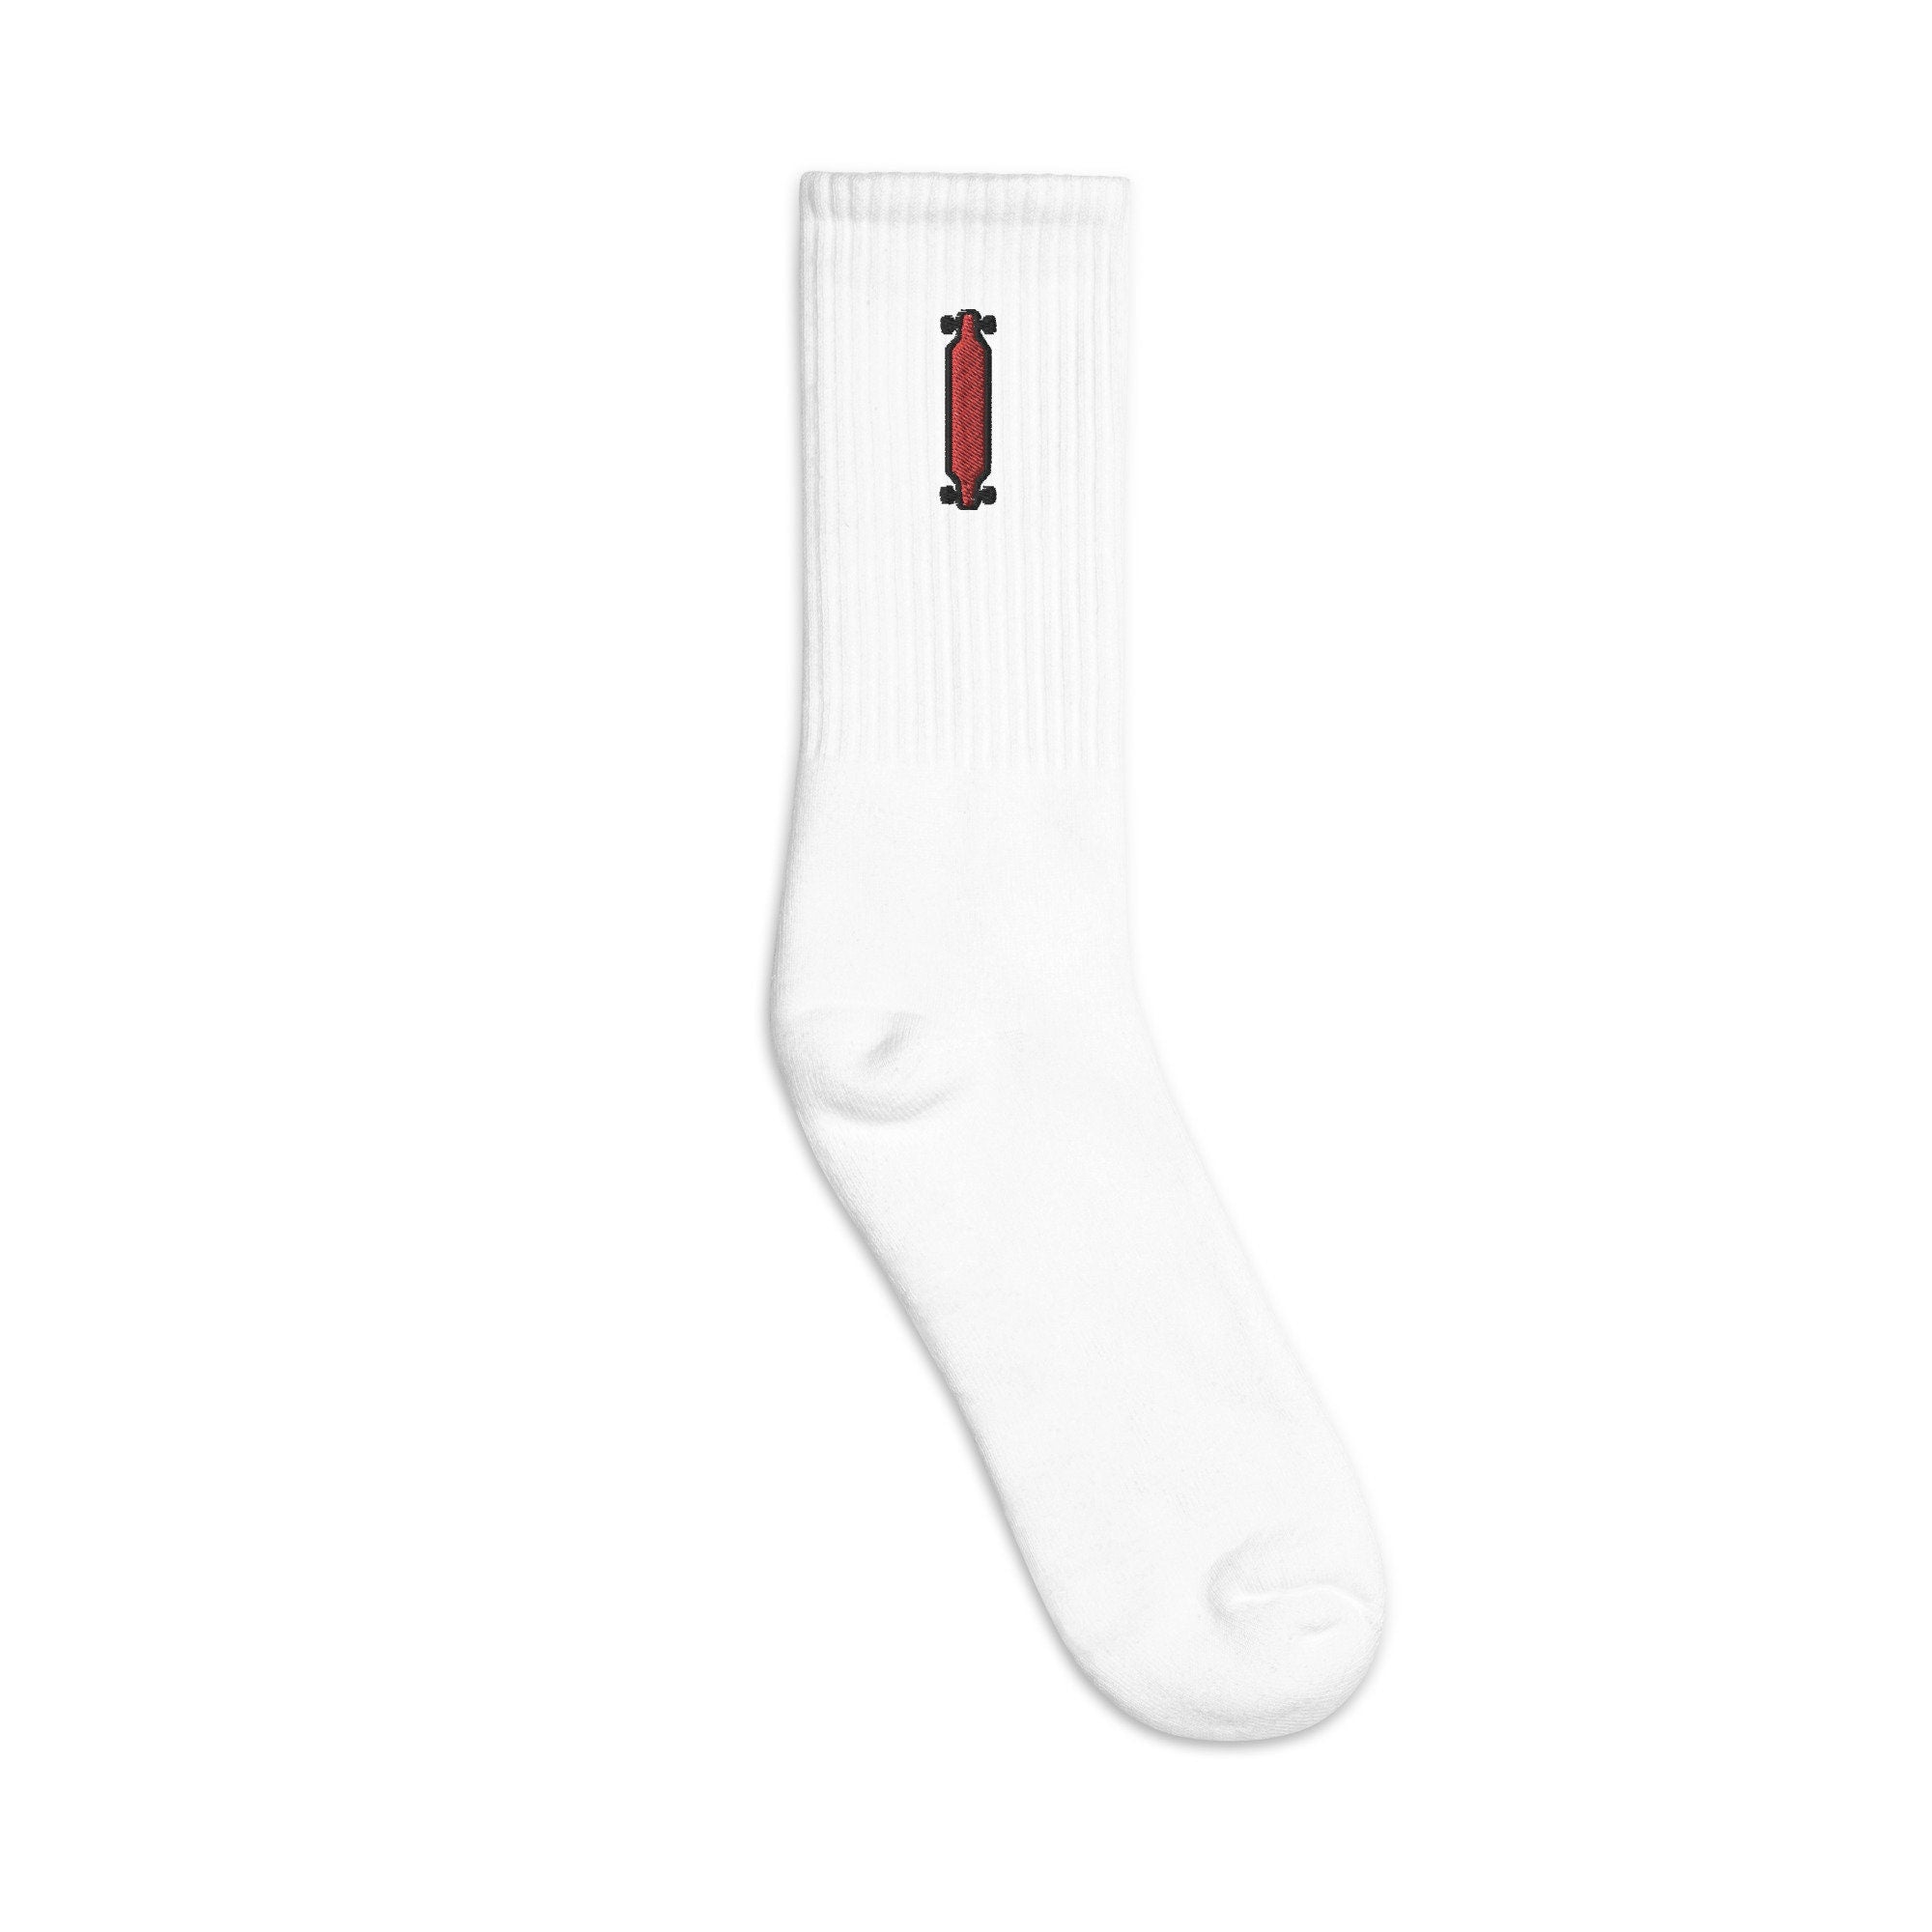 Longboard Embroidered Socks, Premium Embroidered Socks, Long Socks Gift - Multiple Colors